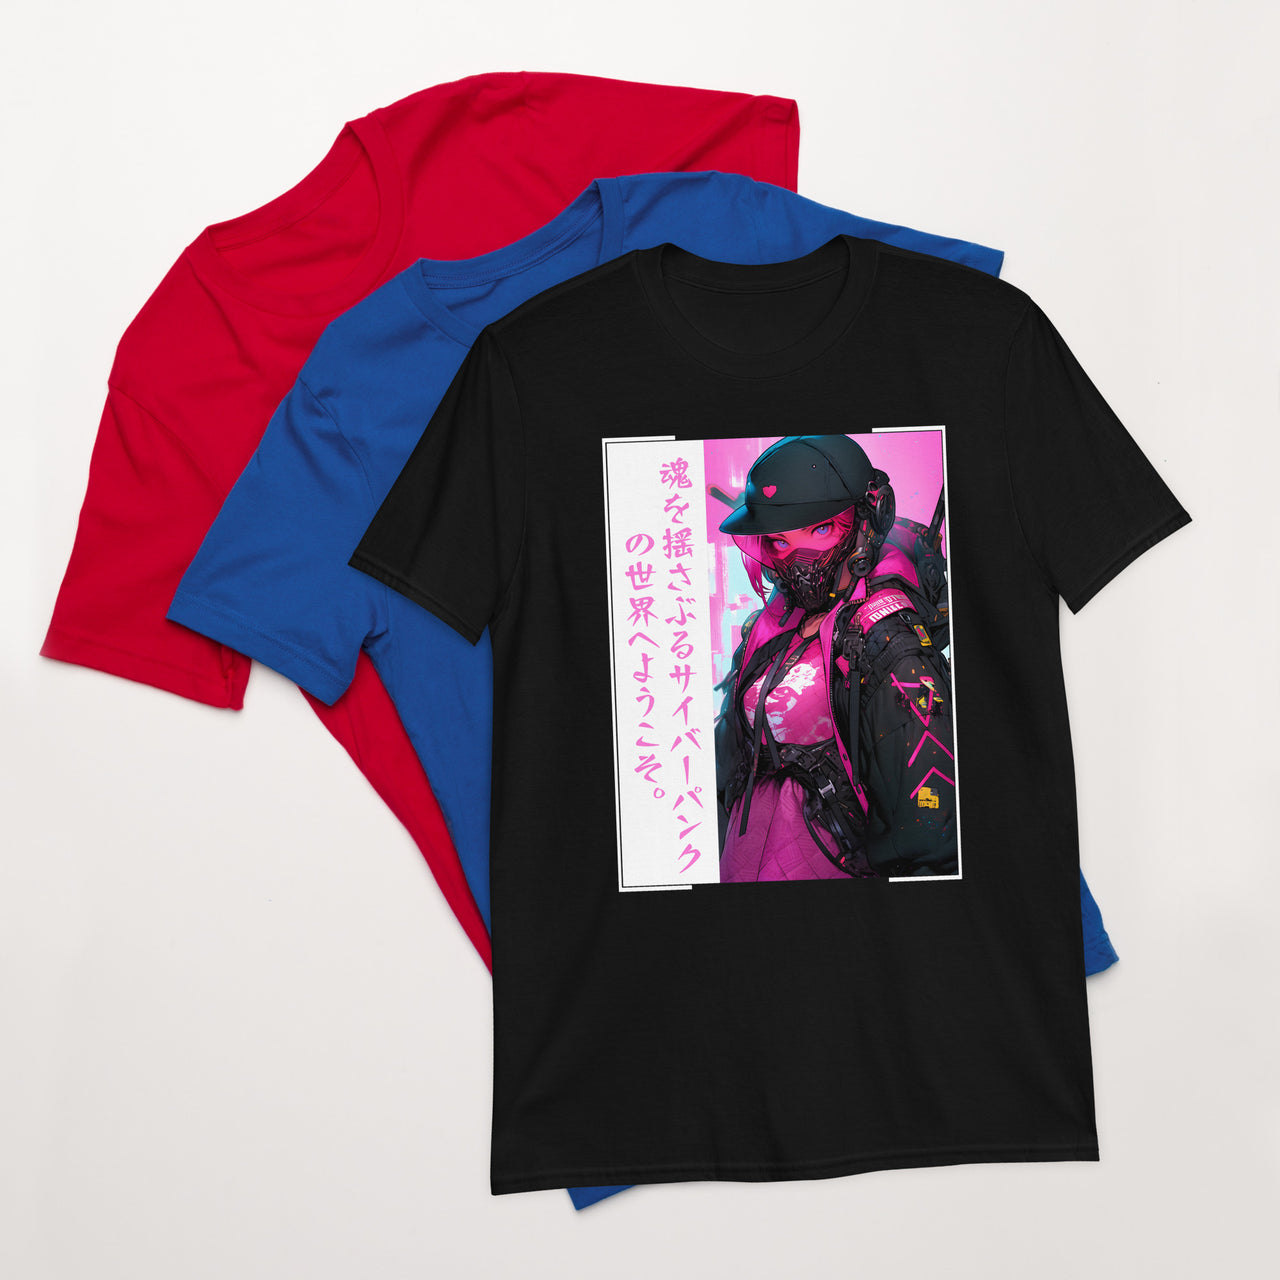 Gritty Neo Tokyo Anime Cyberpunk Girl T-Shirt